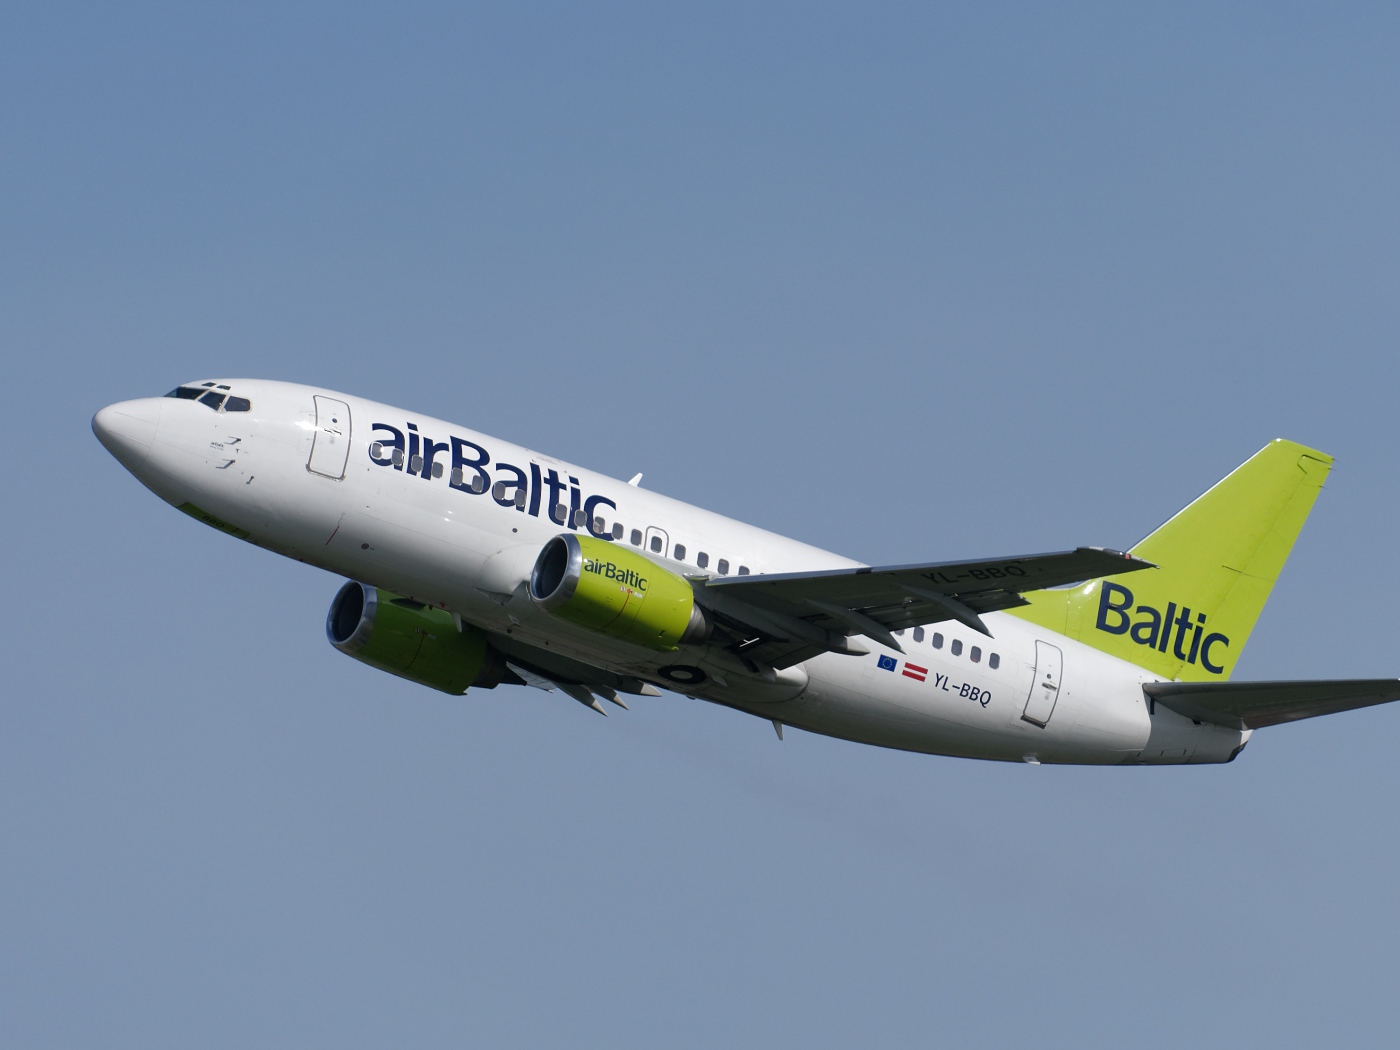 Passenger aircraft Boeing YL-BBQ airline Air Baltic